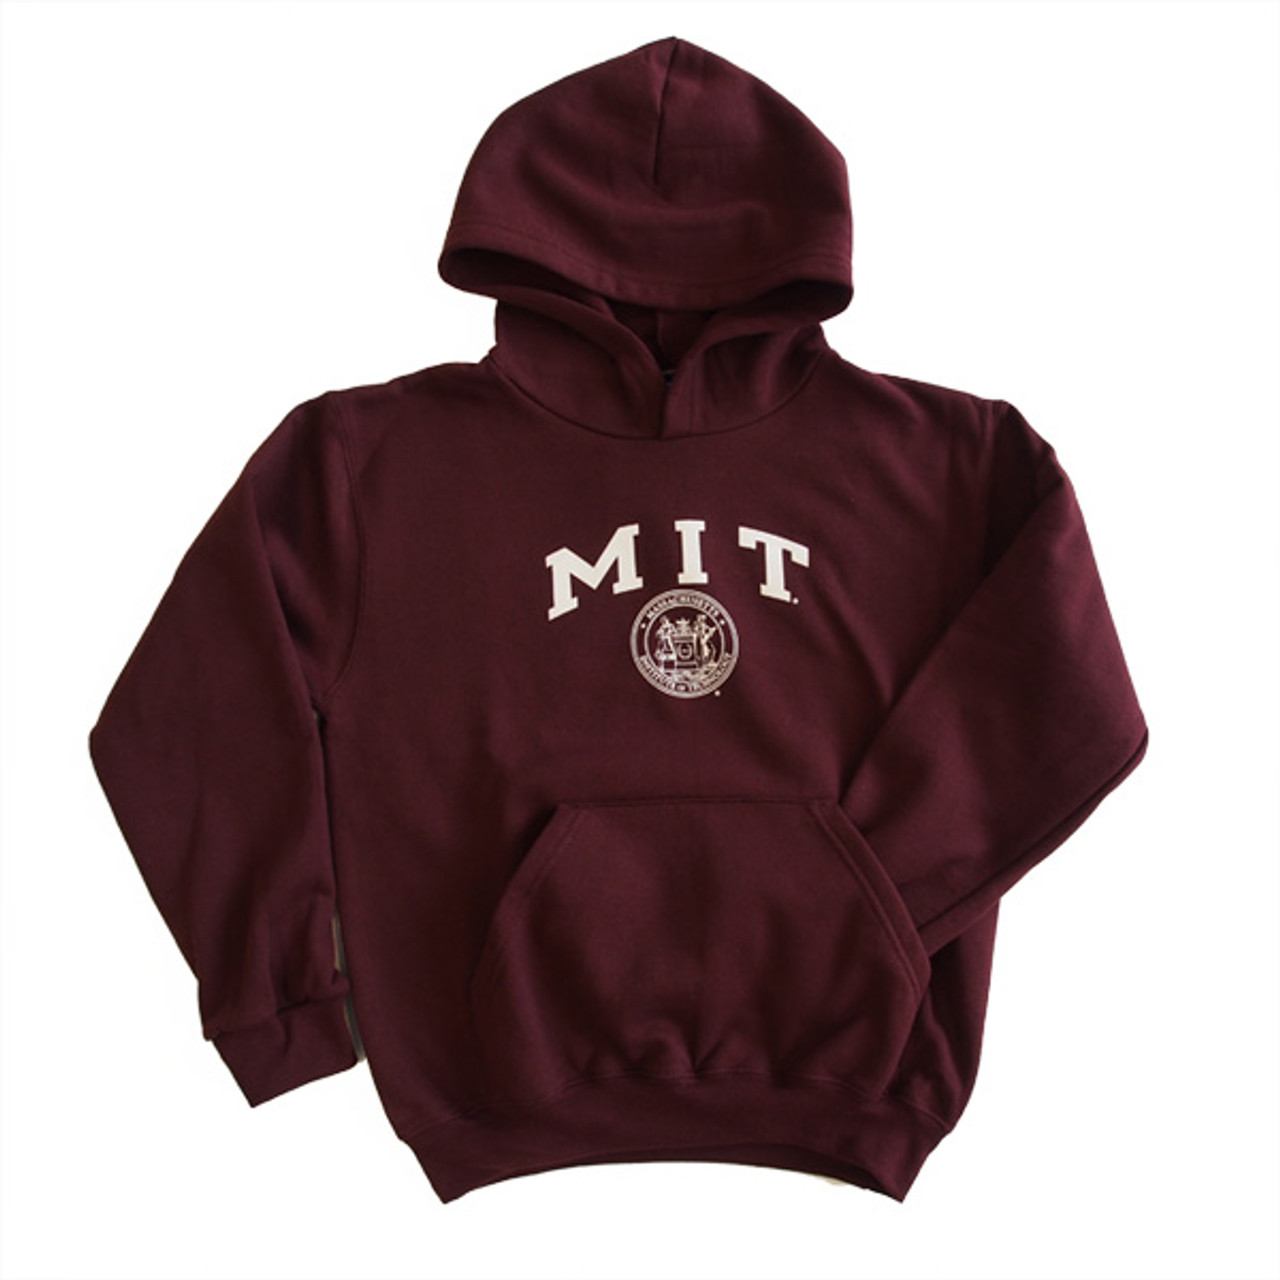 Child's hoodie with MIT logo